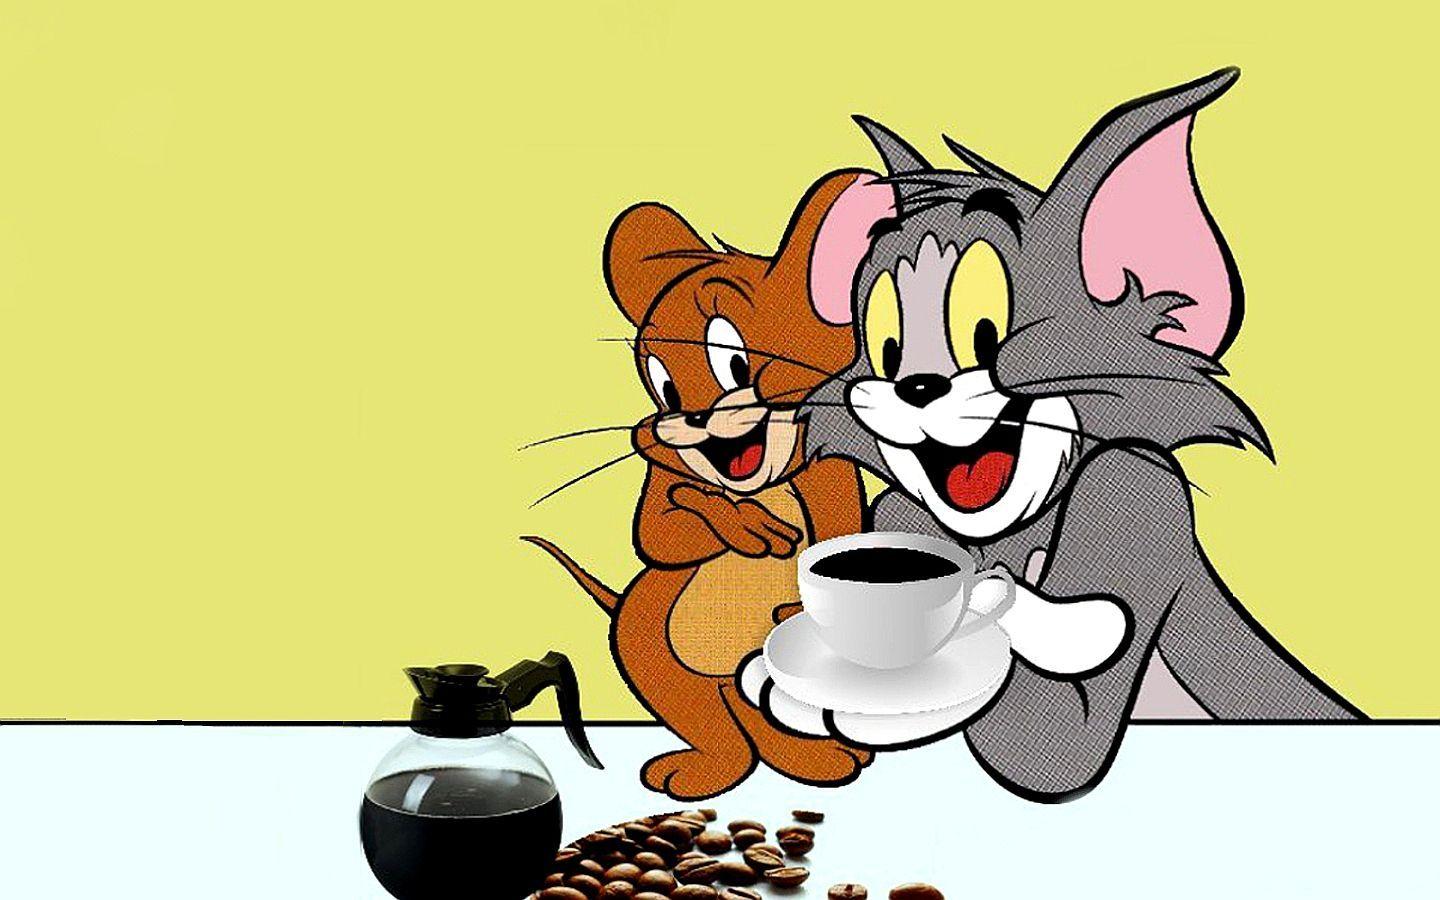 Tom and Jerry. Tom and jerry wallpaper, Tom and jerry cartoon, Tom and jerry